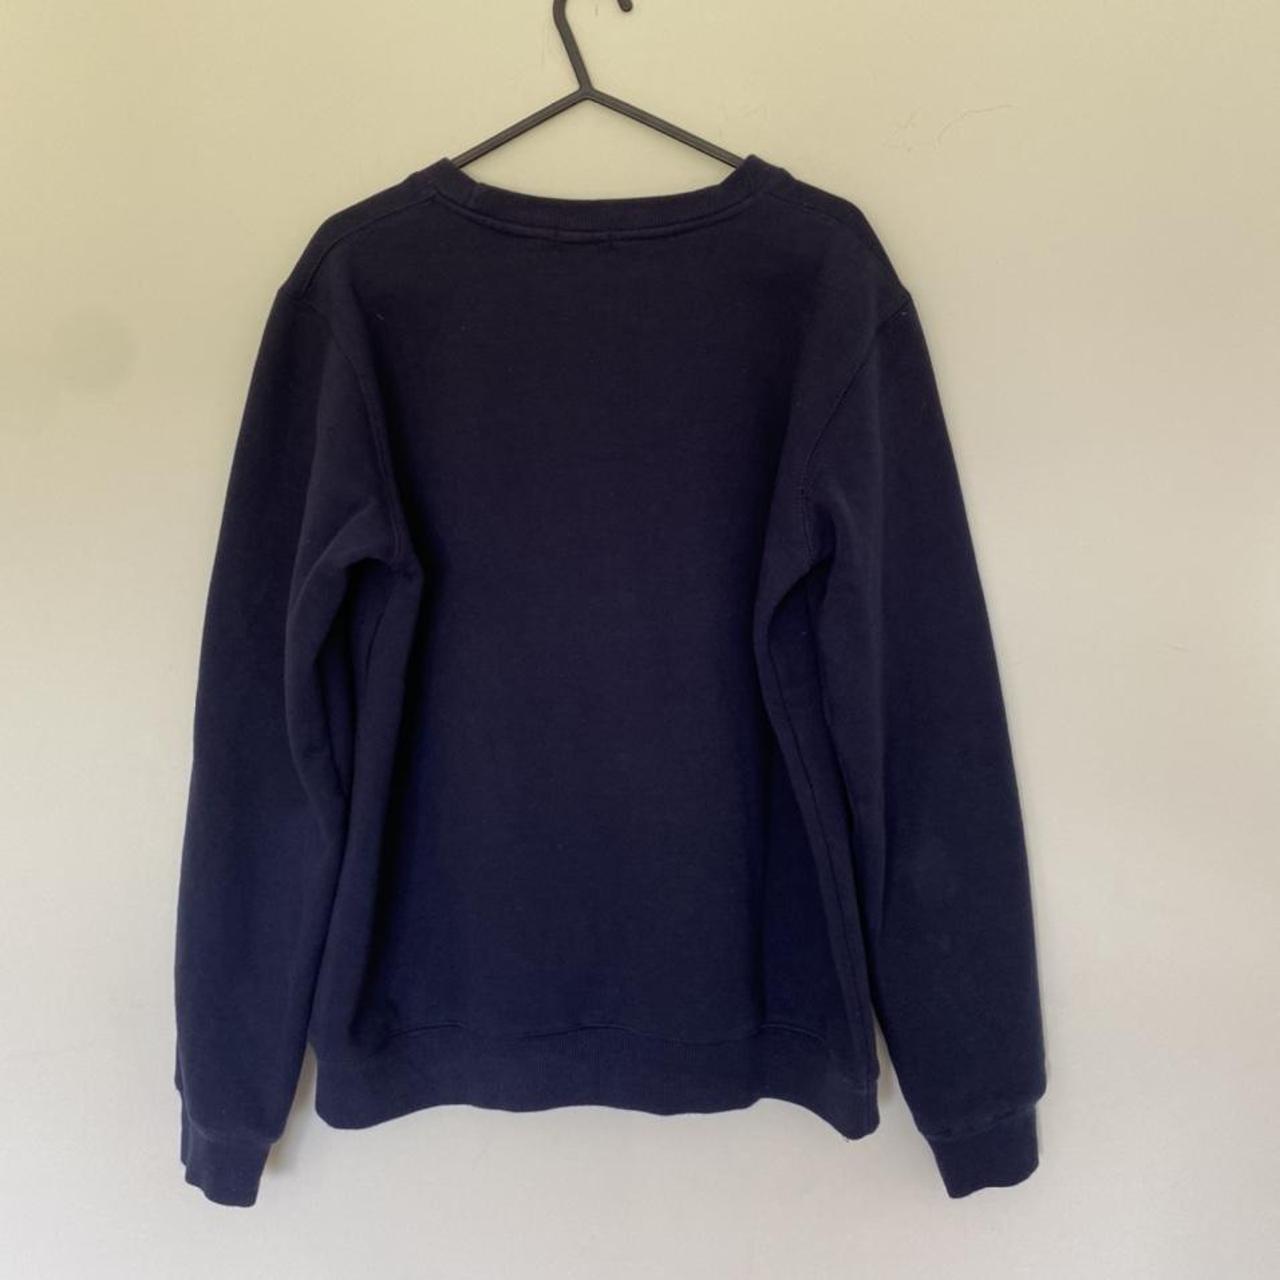 Vintage Kenzo Sweatshirt Iconic Kenzo Spell our... - Depop